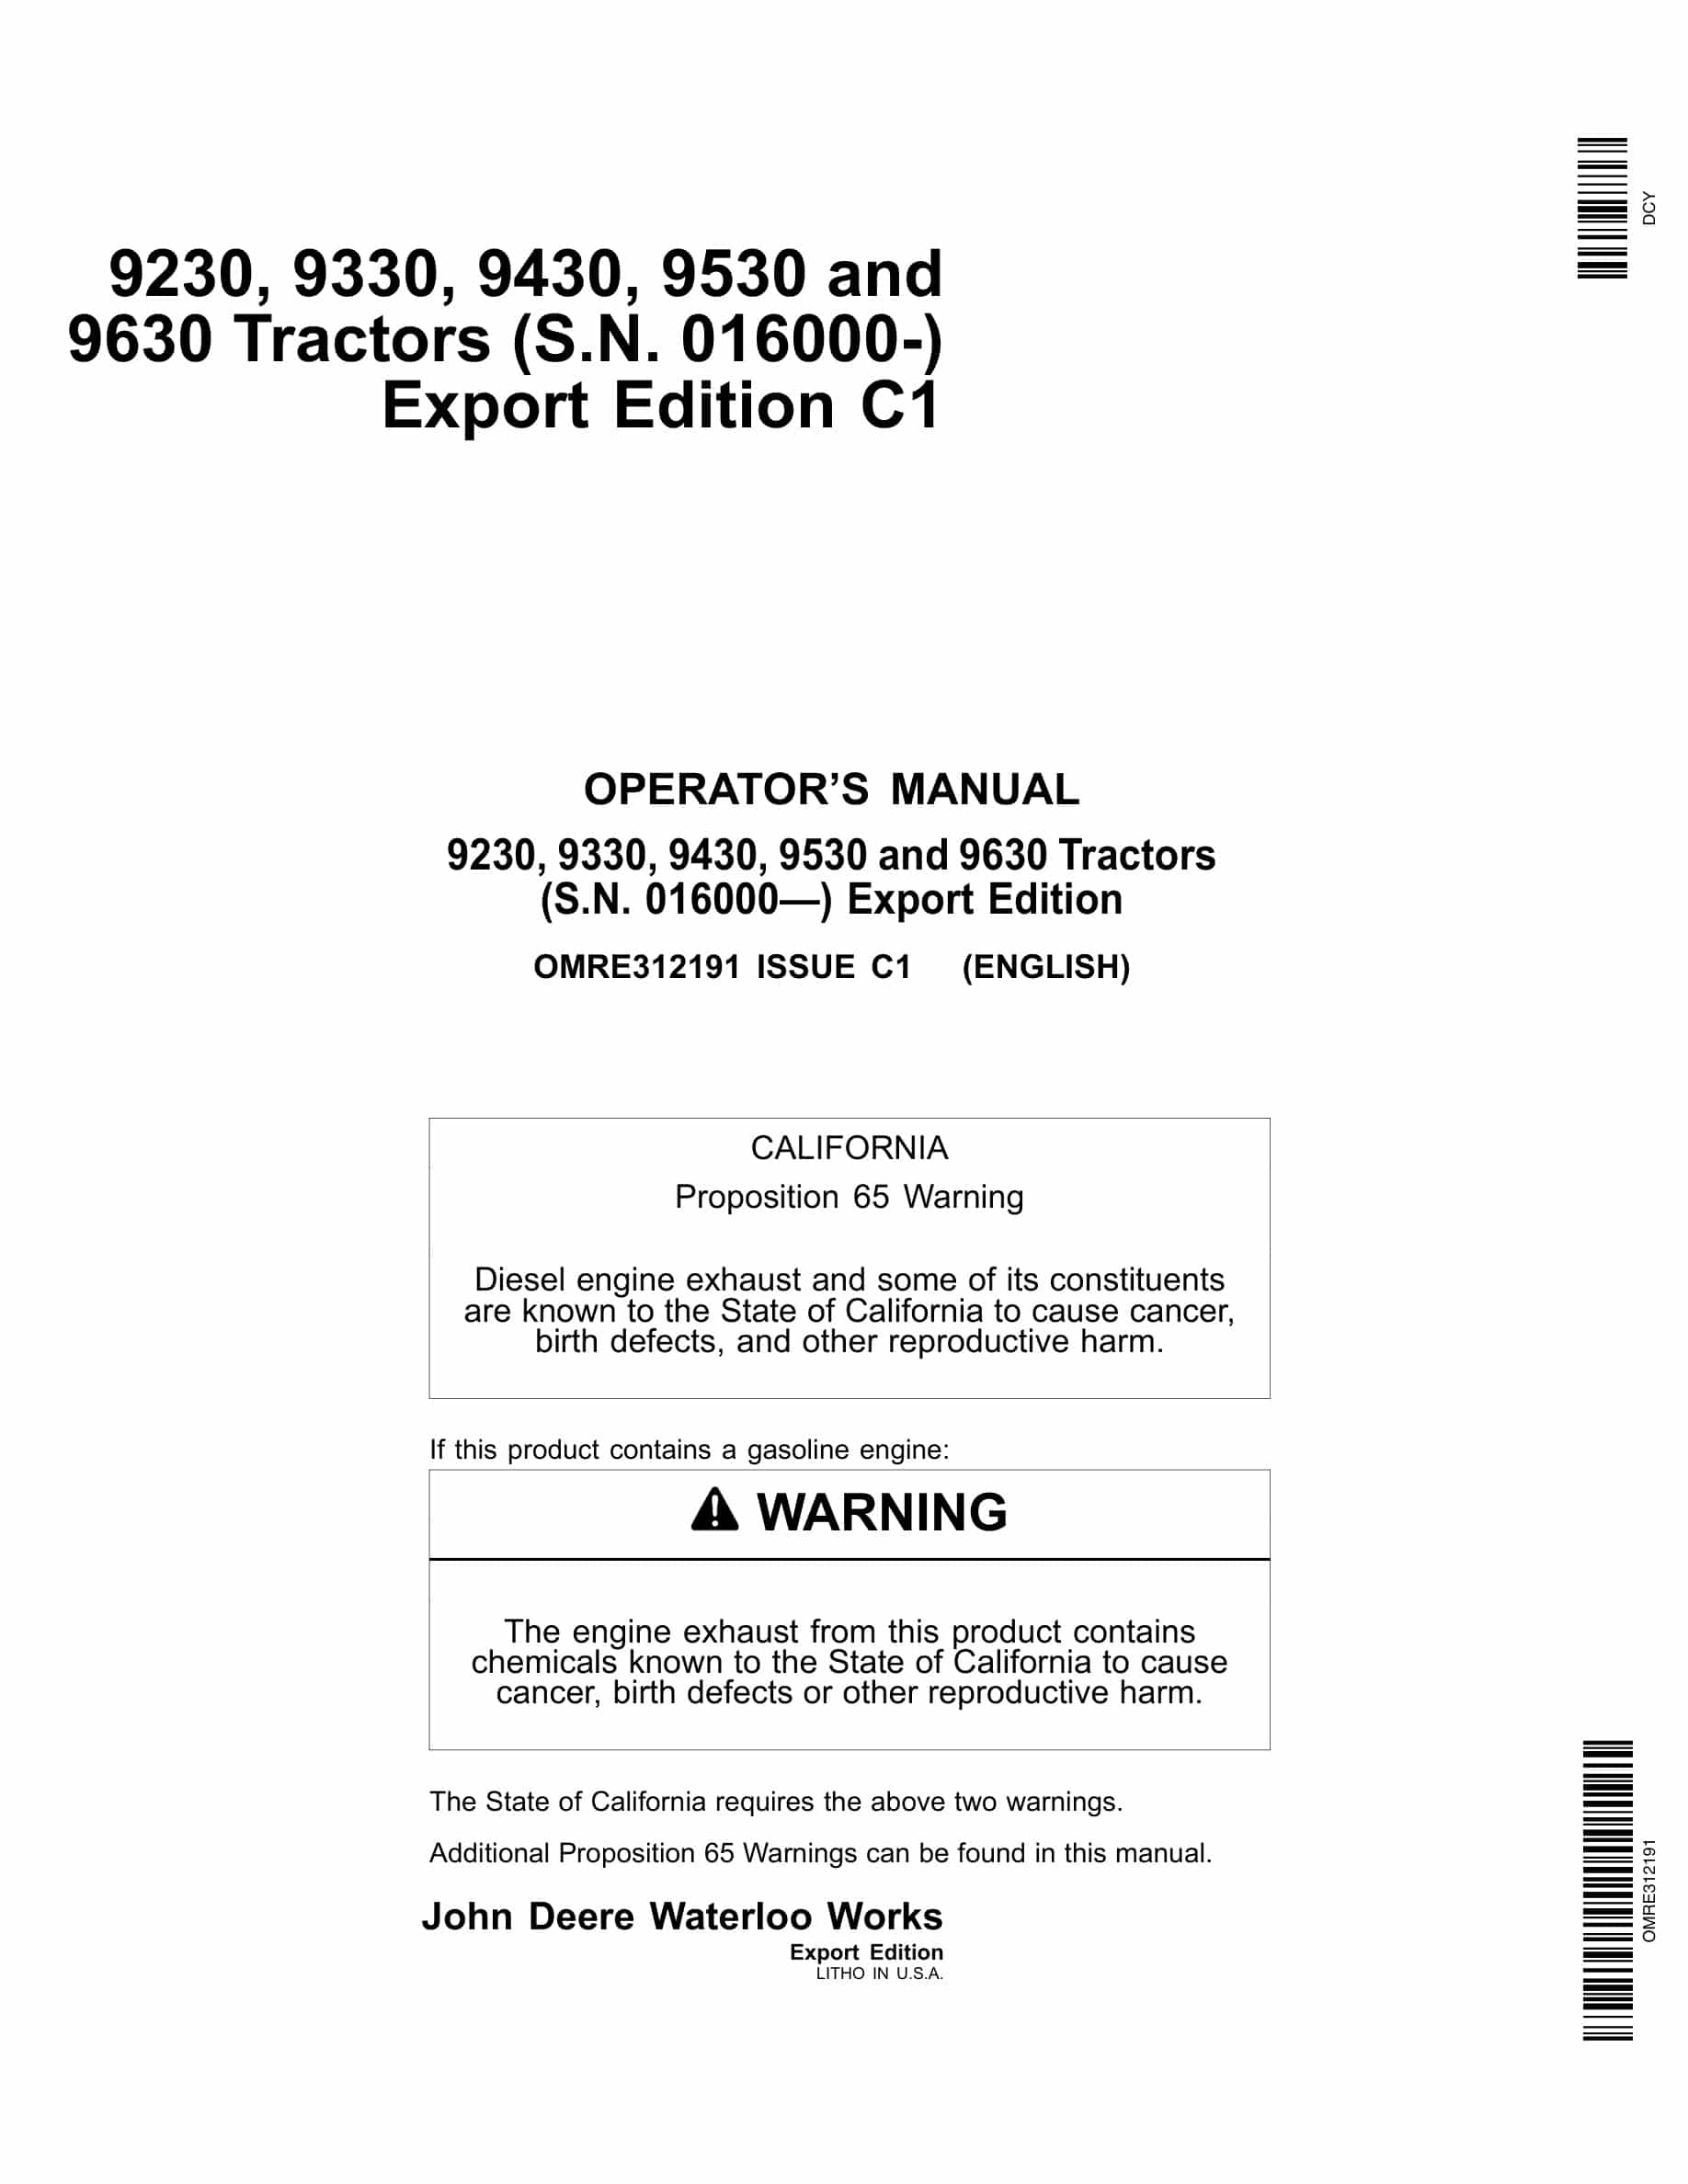 John Deere 9230, 9330, 9430, 9530 And 9630 Tractors Operator Manuals OMRE312191-1